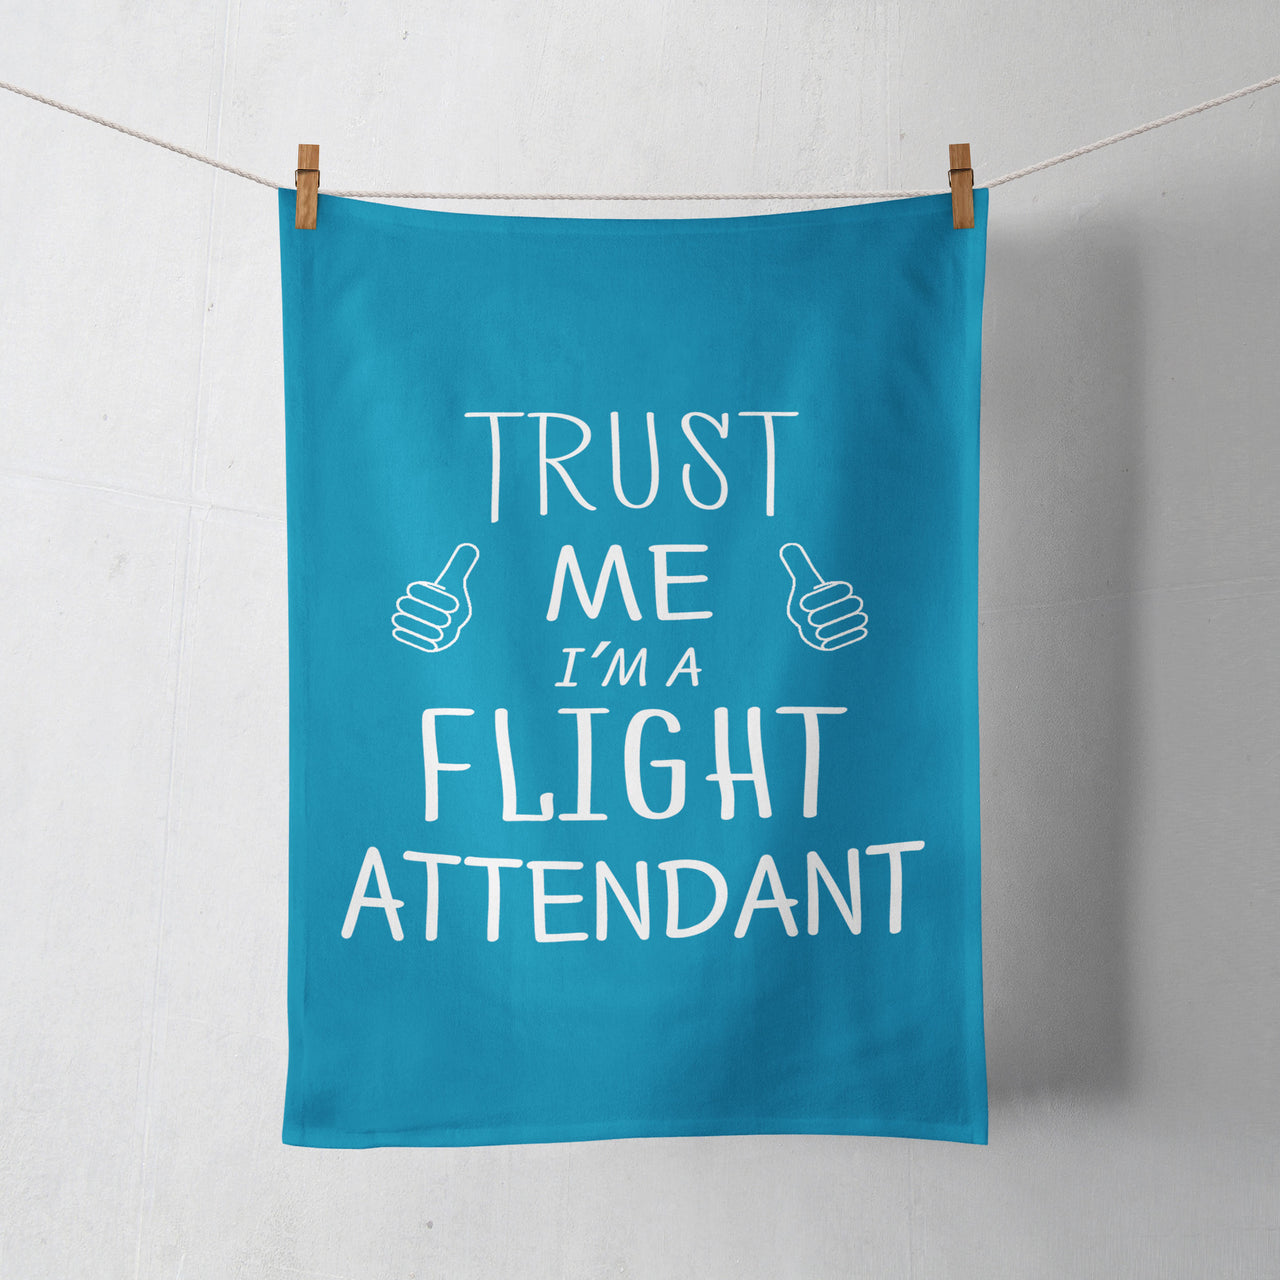 Trust Me I'm a Flight Attendant Designed Towels